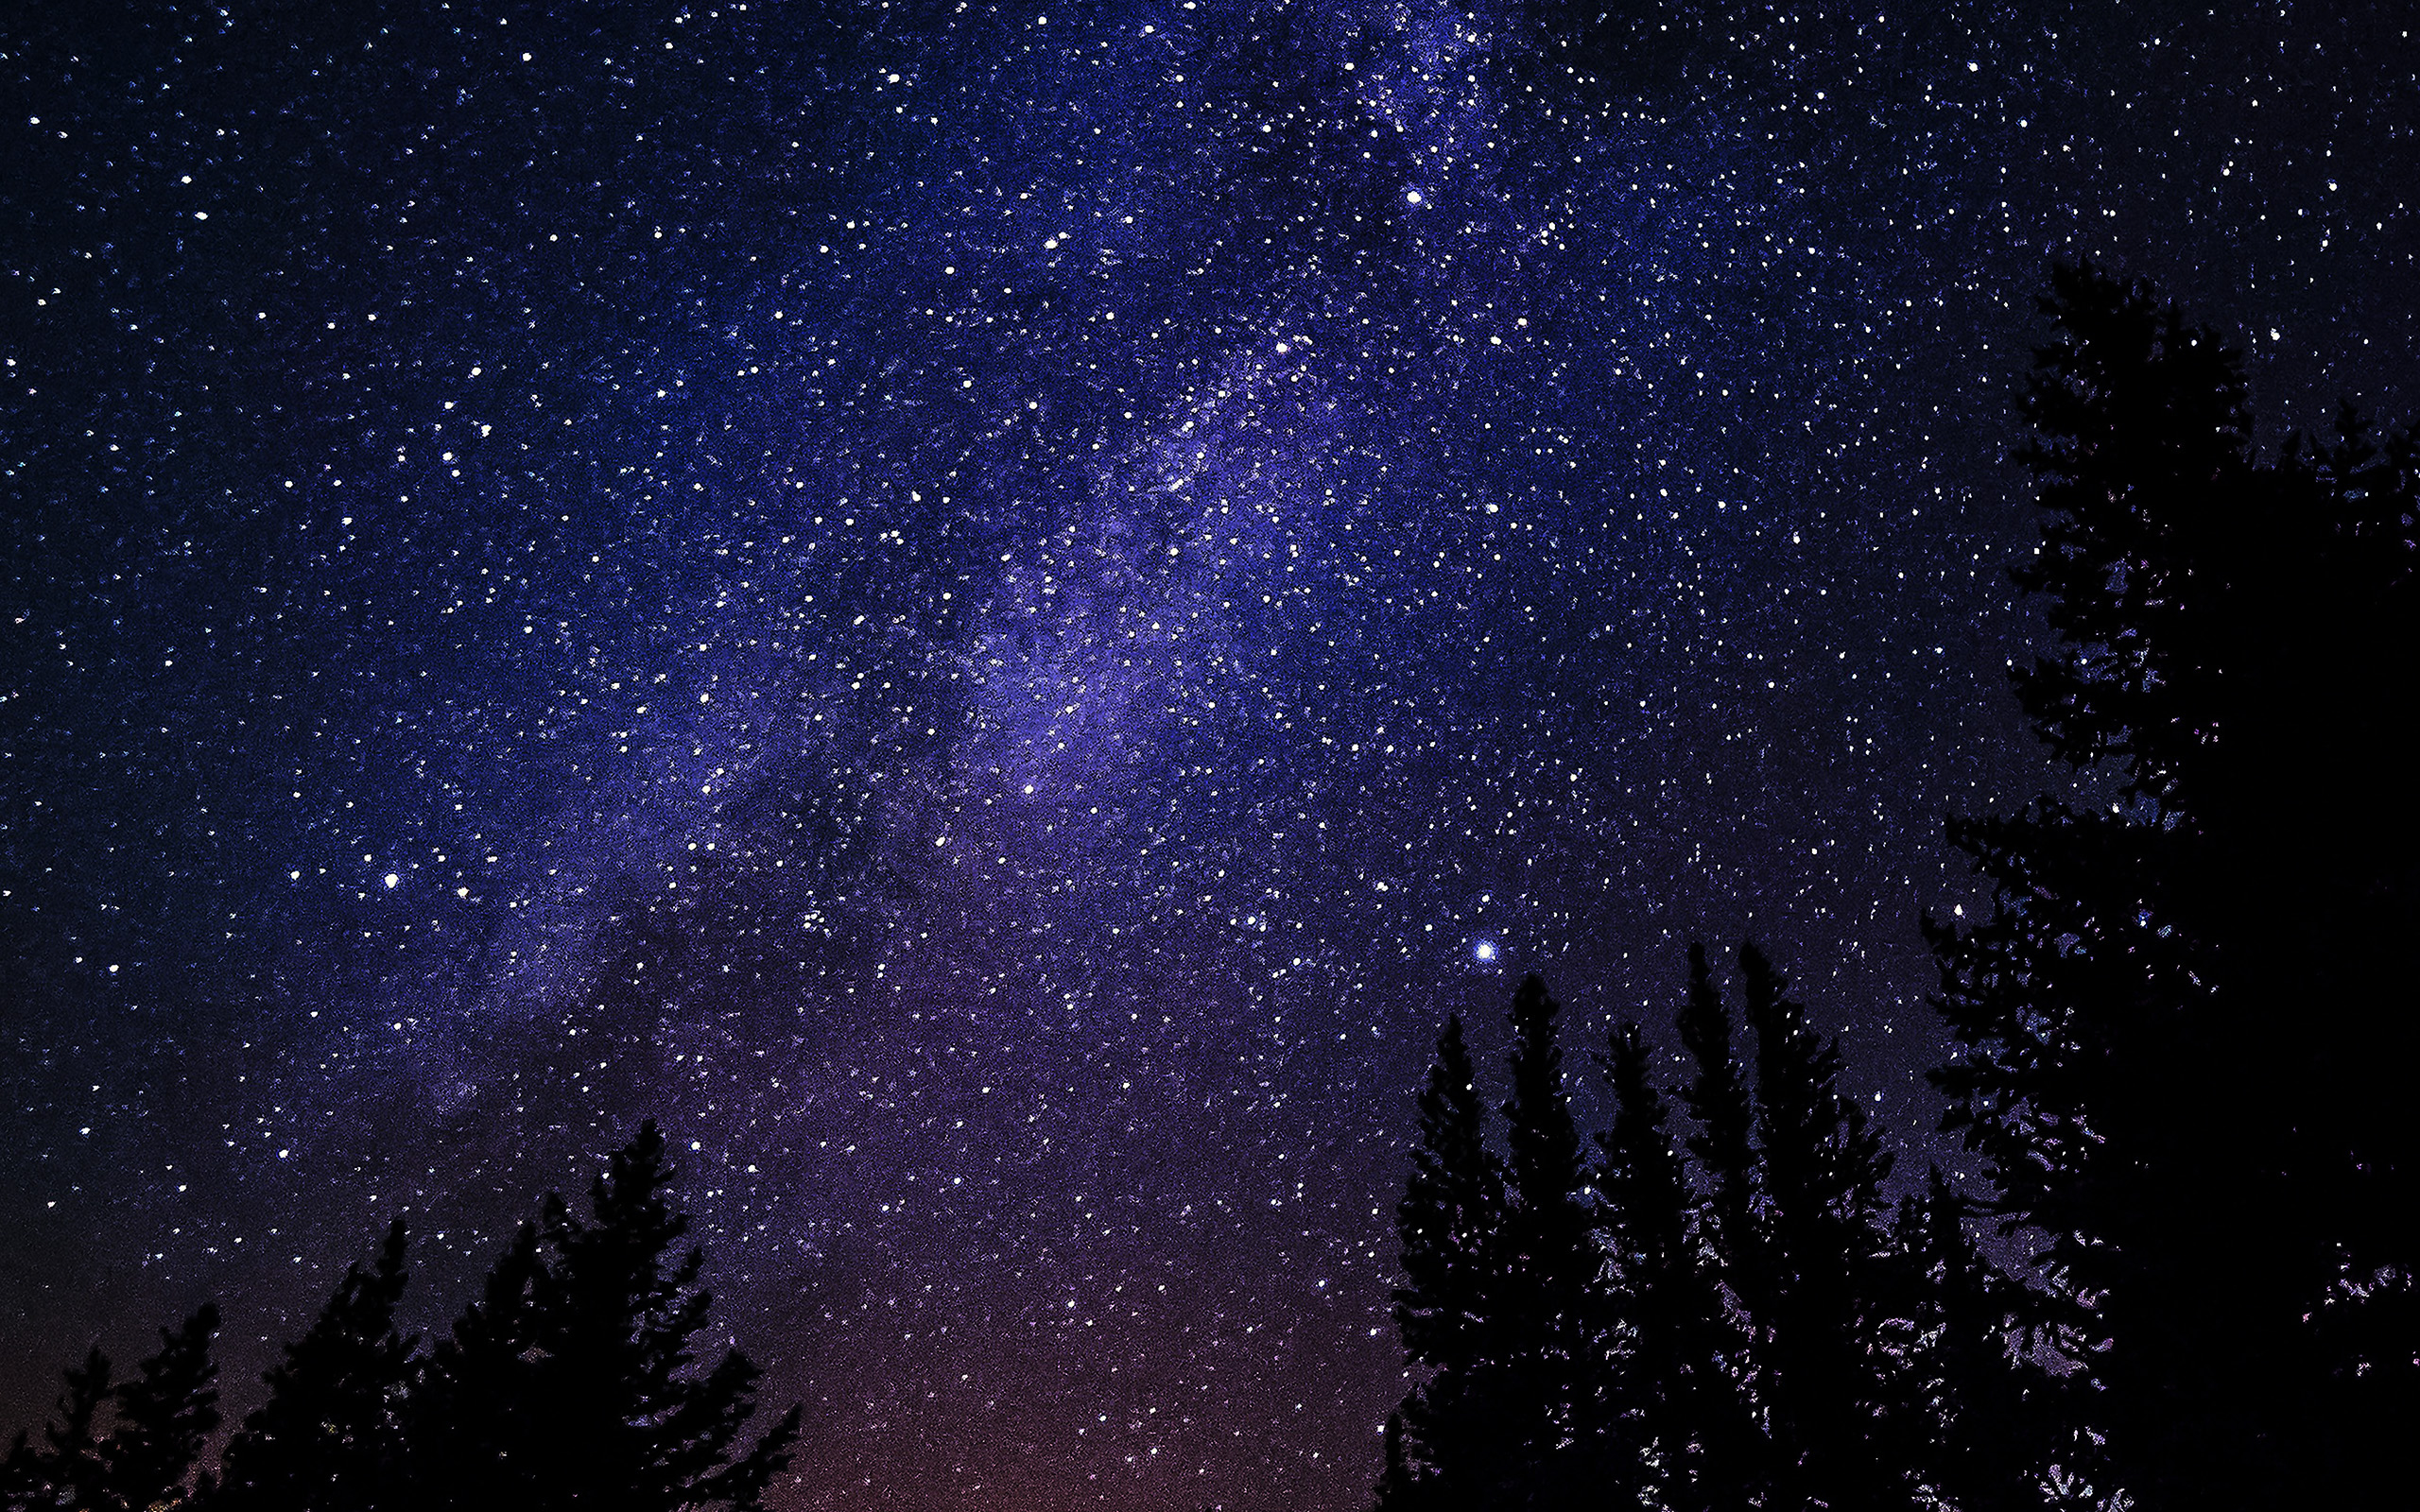 2560x1600 wallpaper for desktop, laptop | nl61-night-starry-sky-aurora-winter-dark